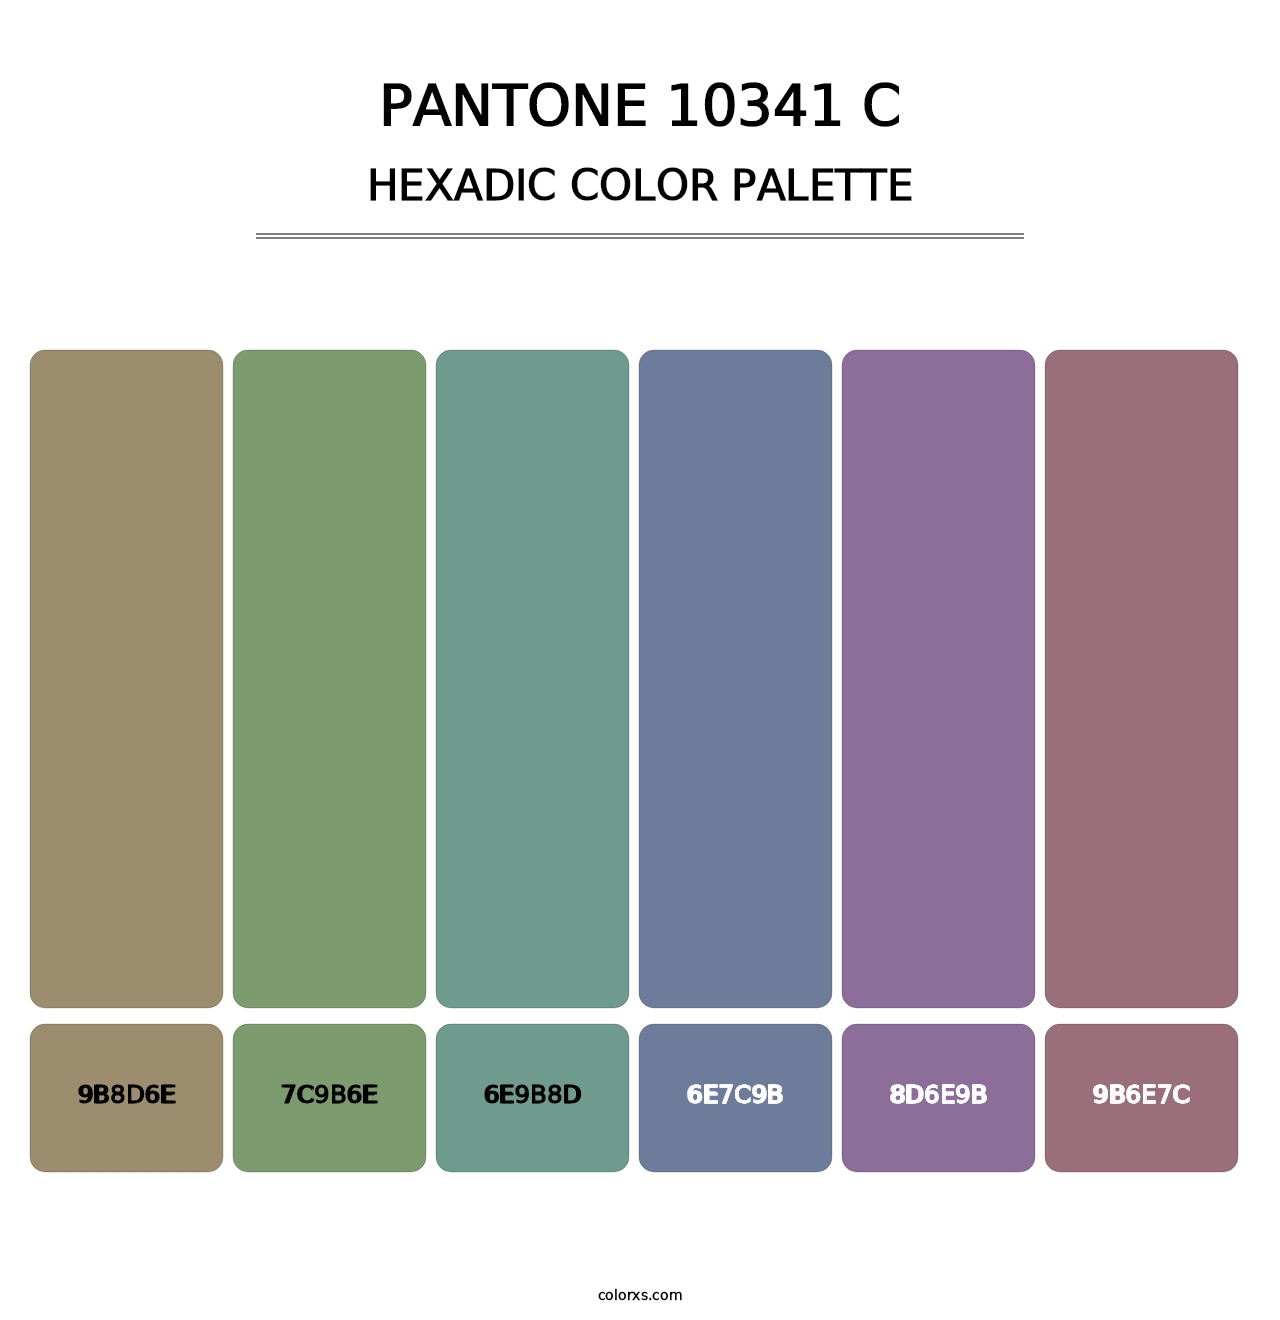 PANTONE 10341 C - Hexadic Color Palette